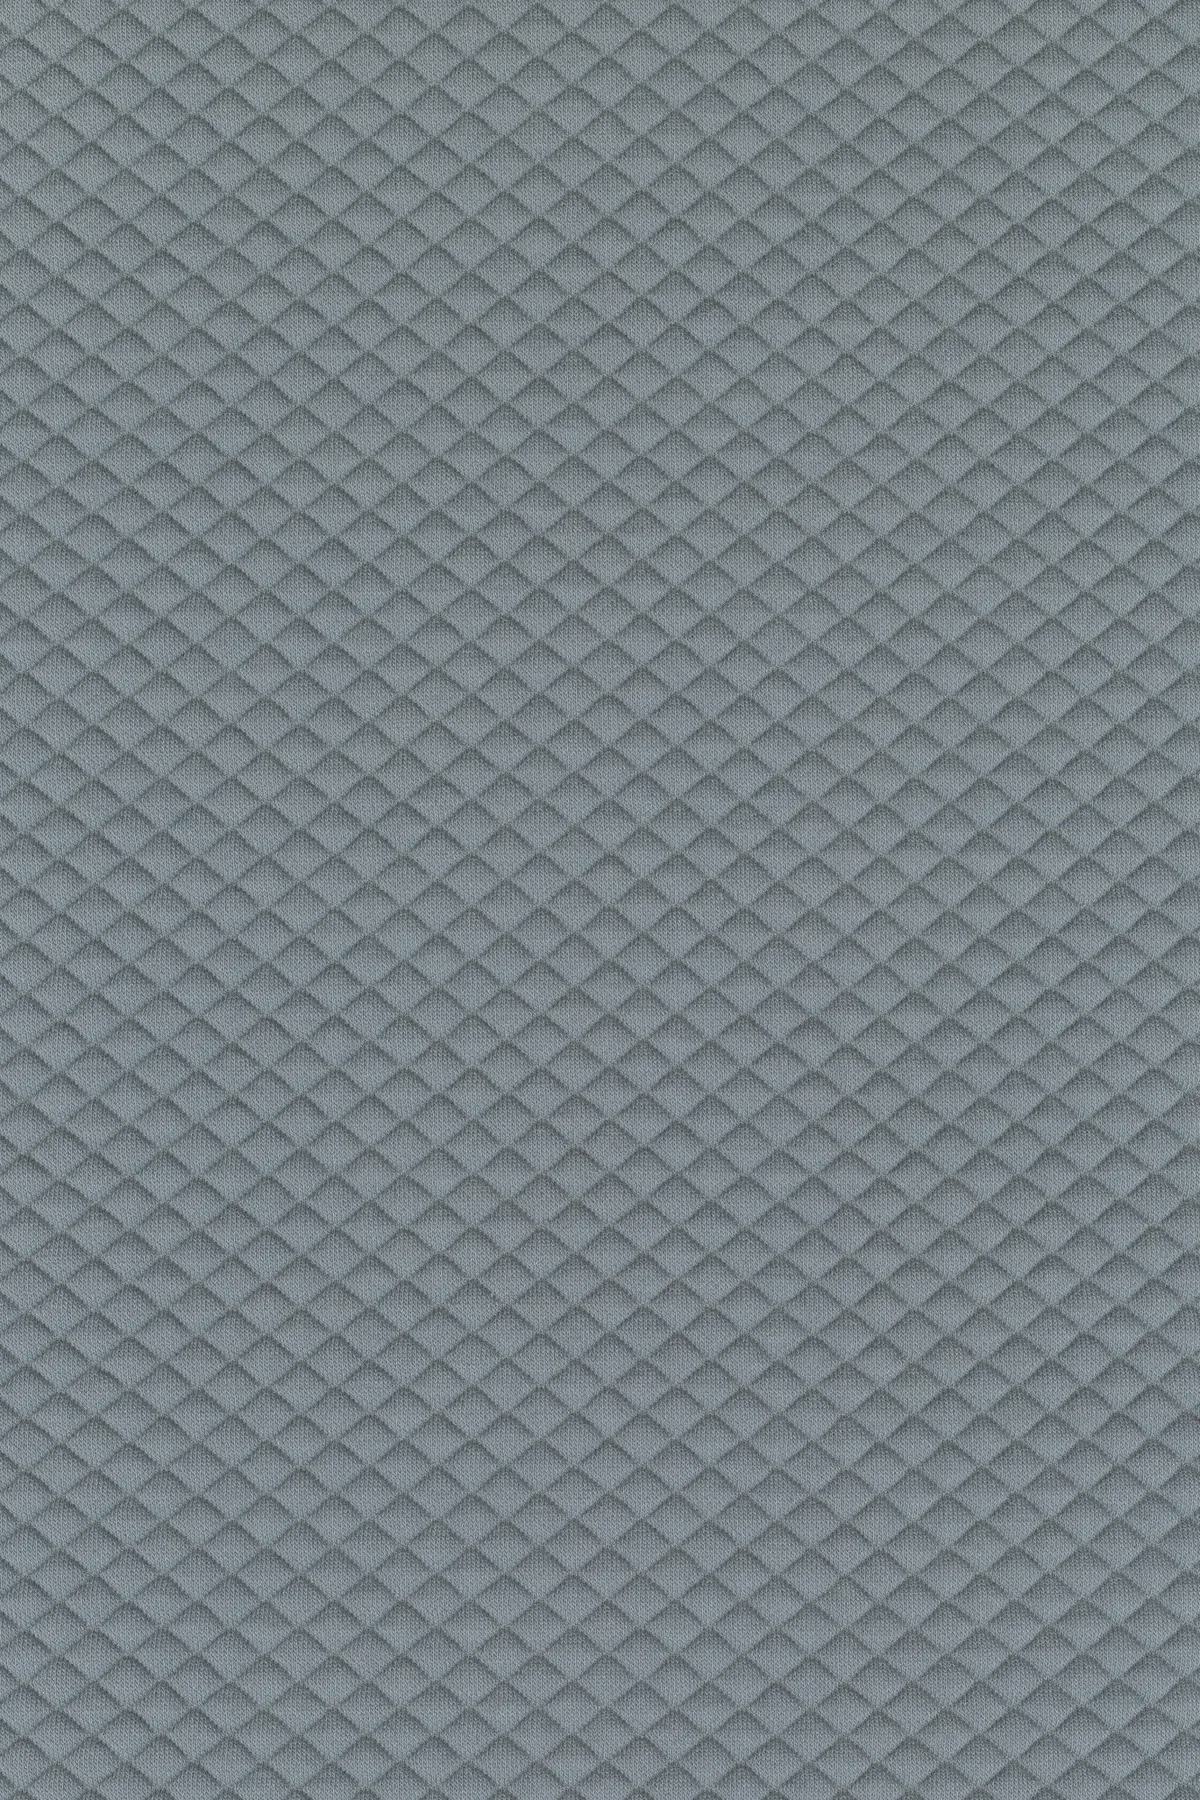 Fabric sample Mosaic 2 0722 grey